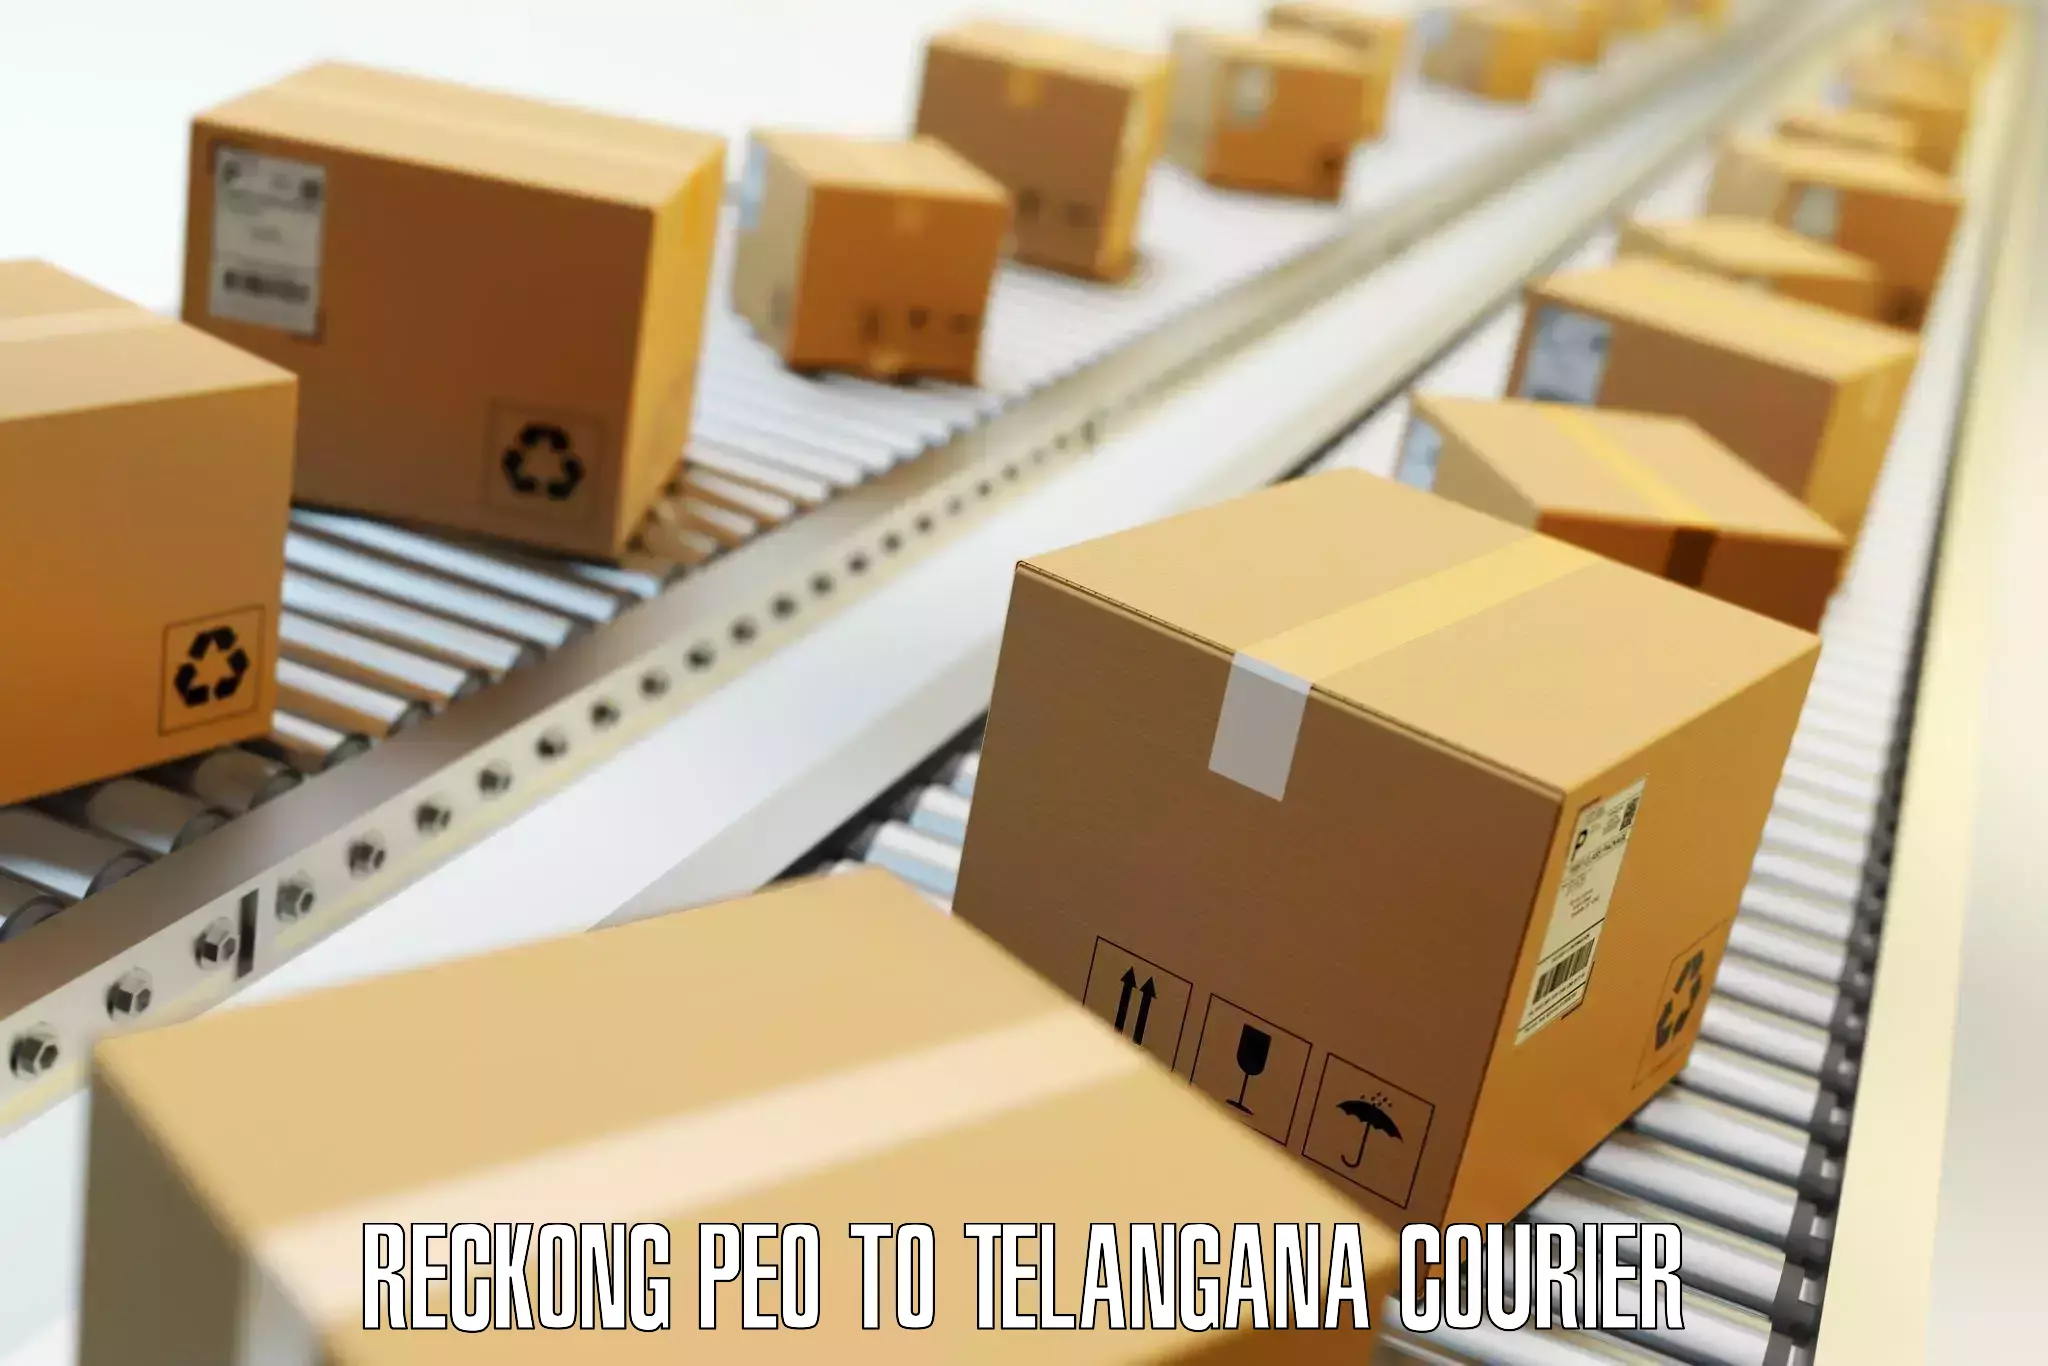 Luggage shipment strategy Reckong Peo to Manuguru